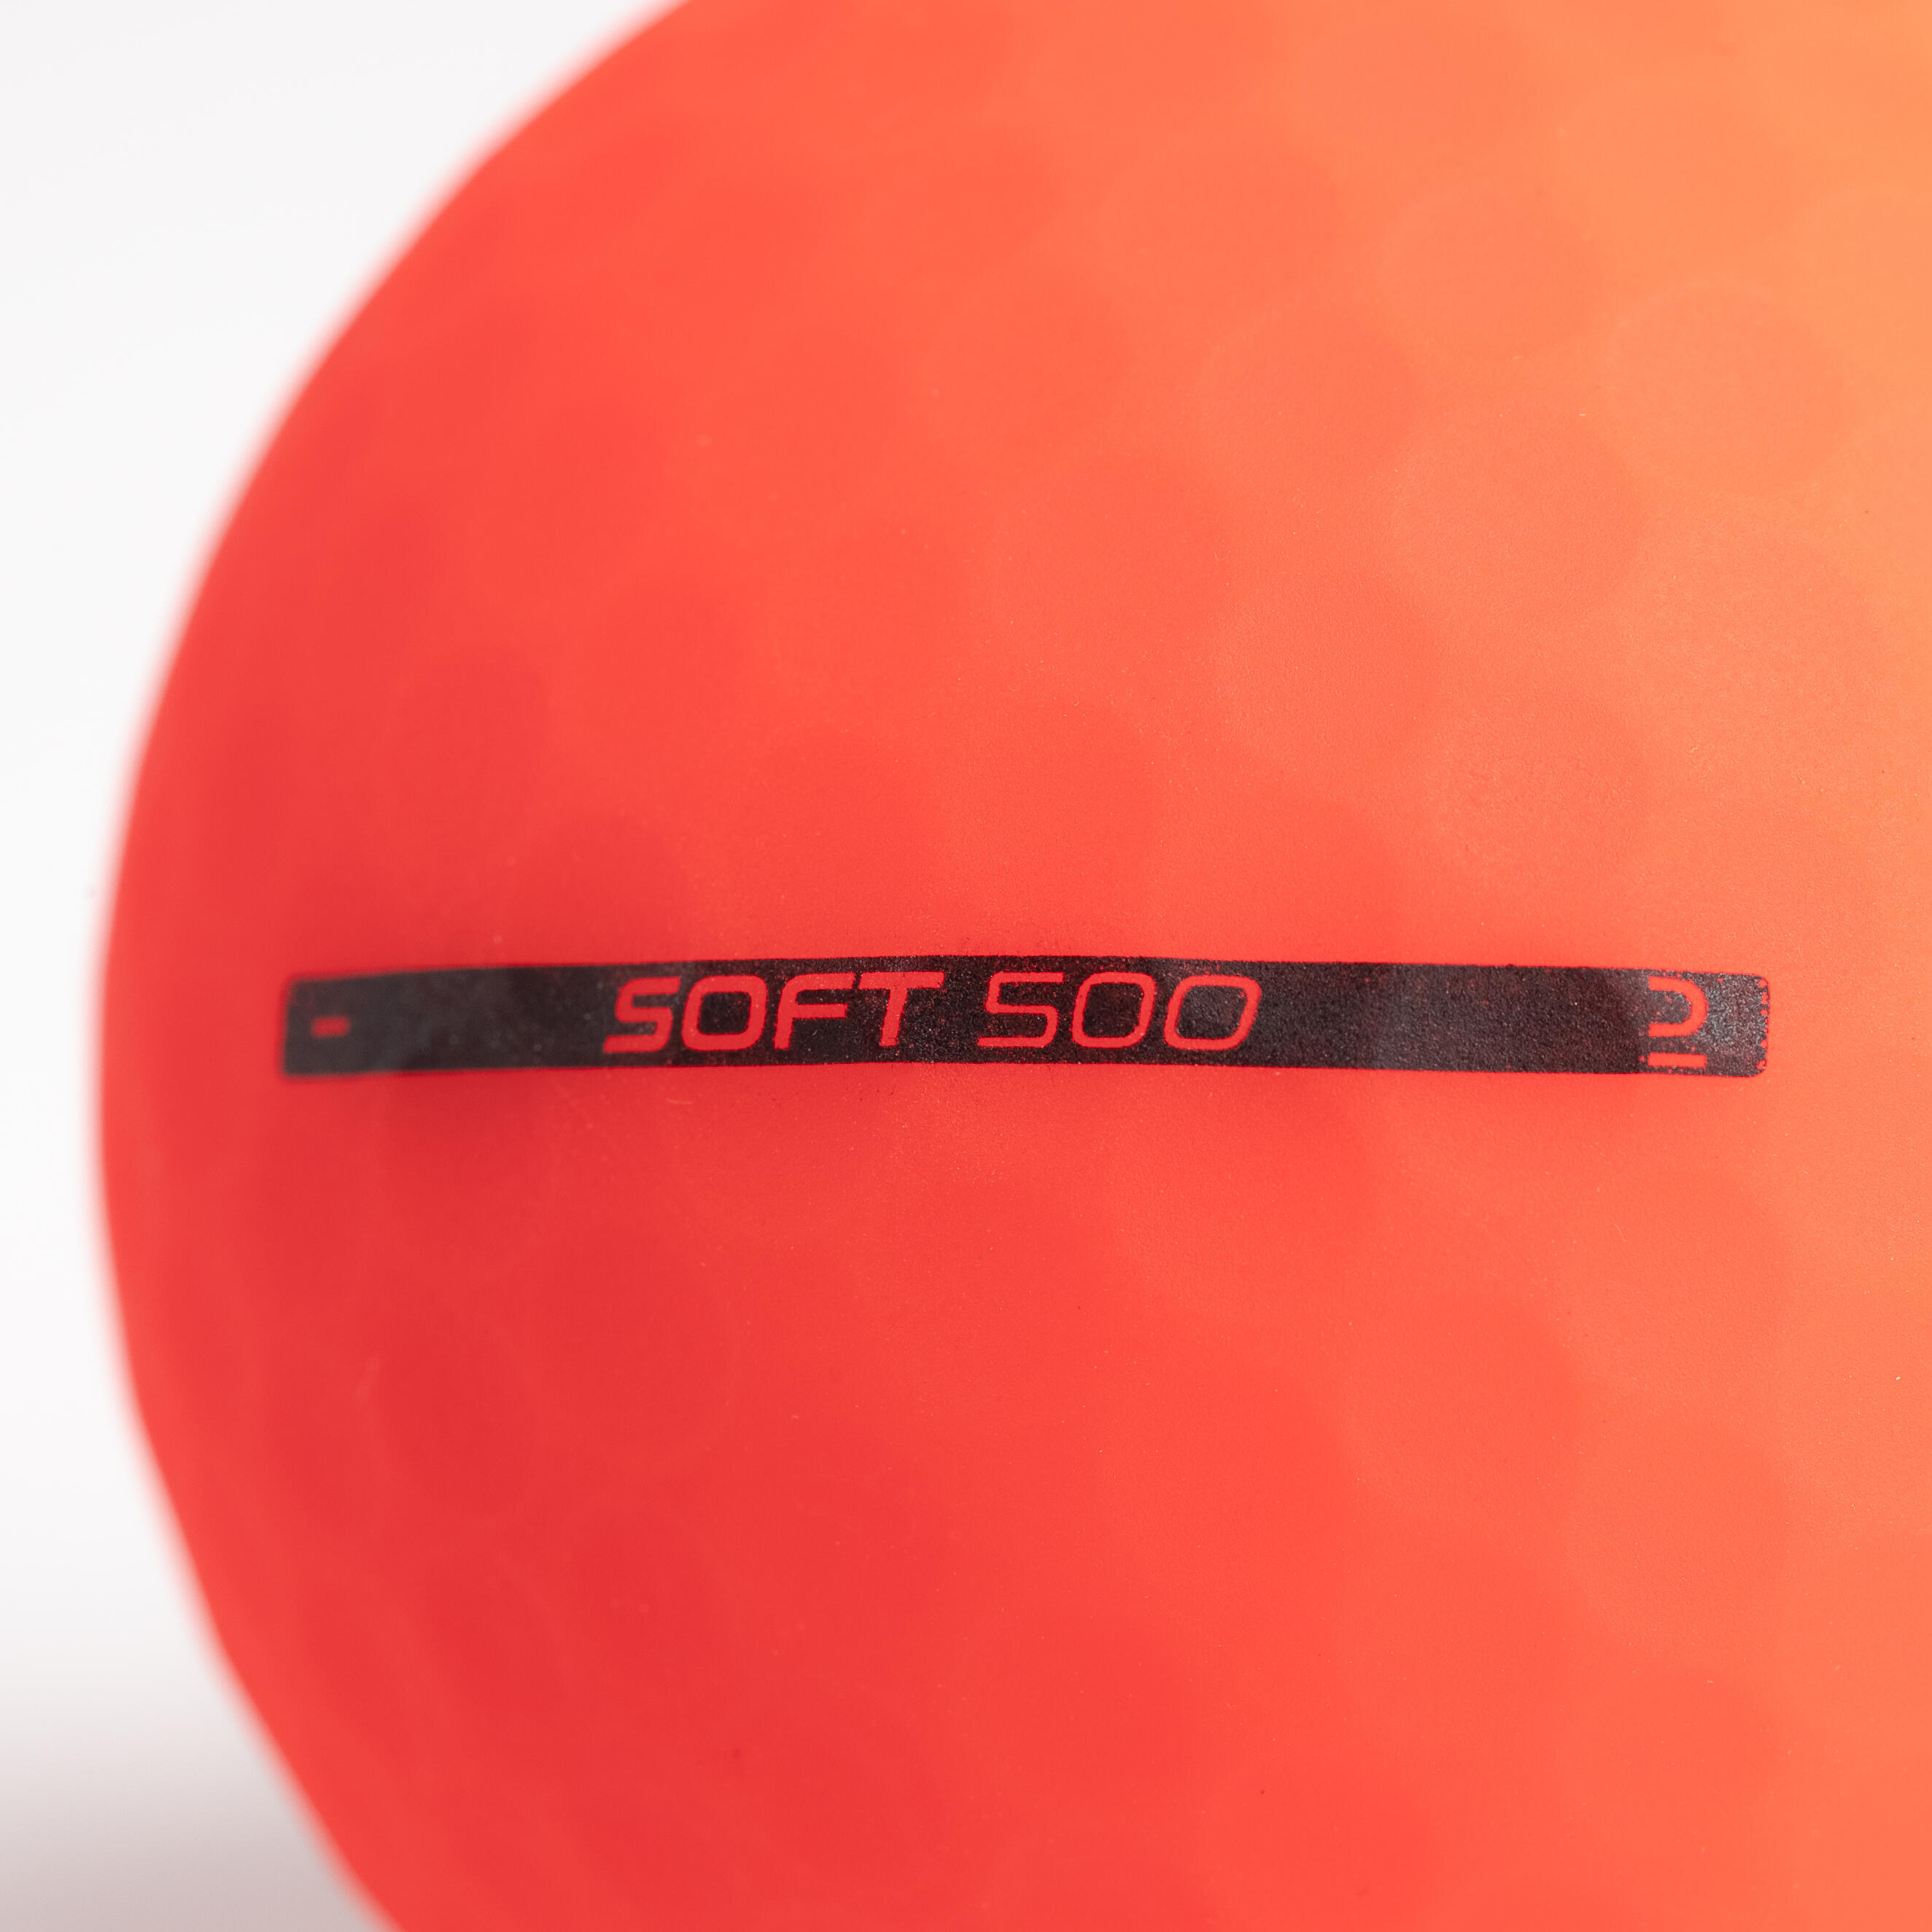 Golf balls x12 - INESIS Soft 500 matte red 4/8